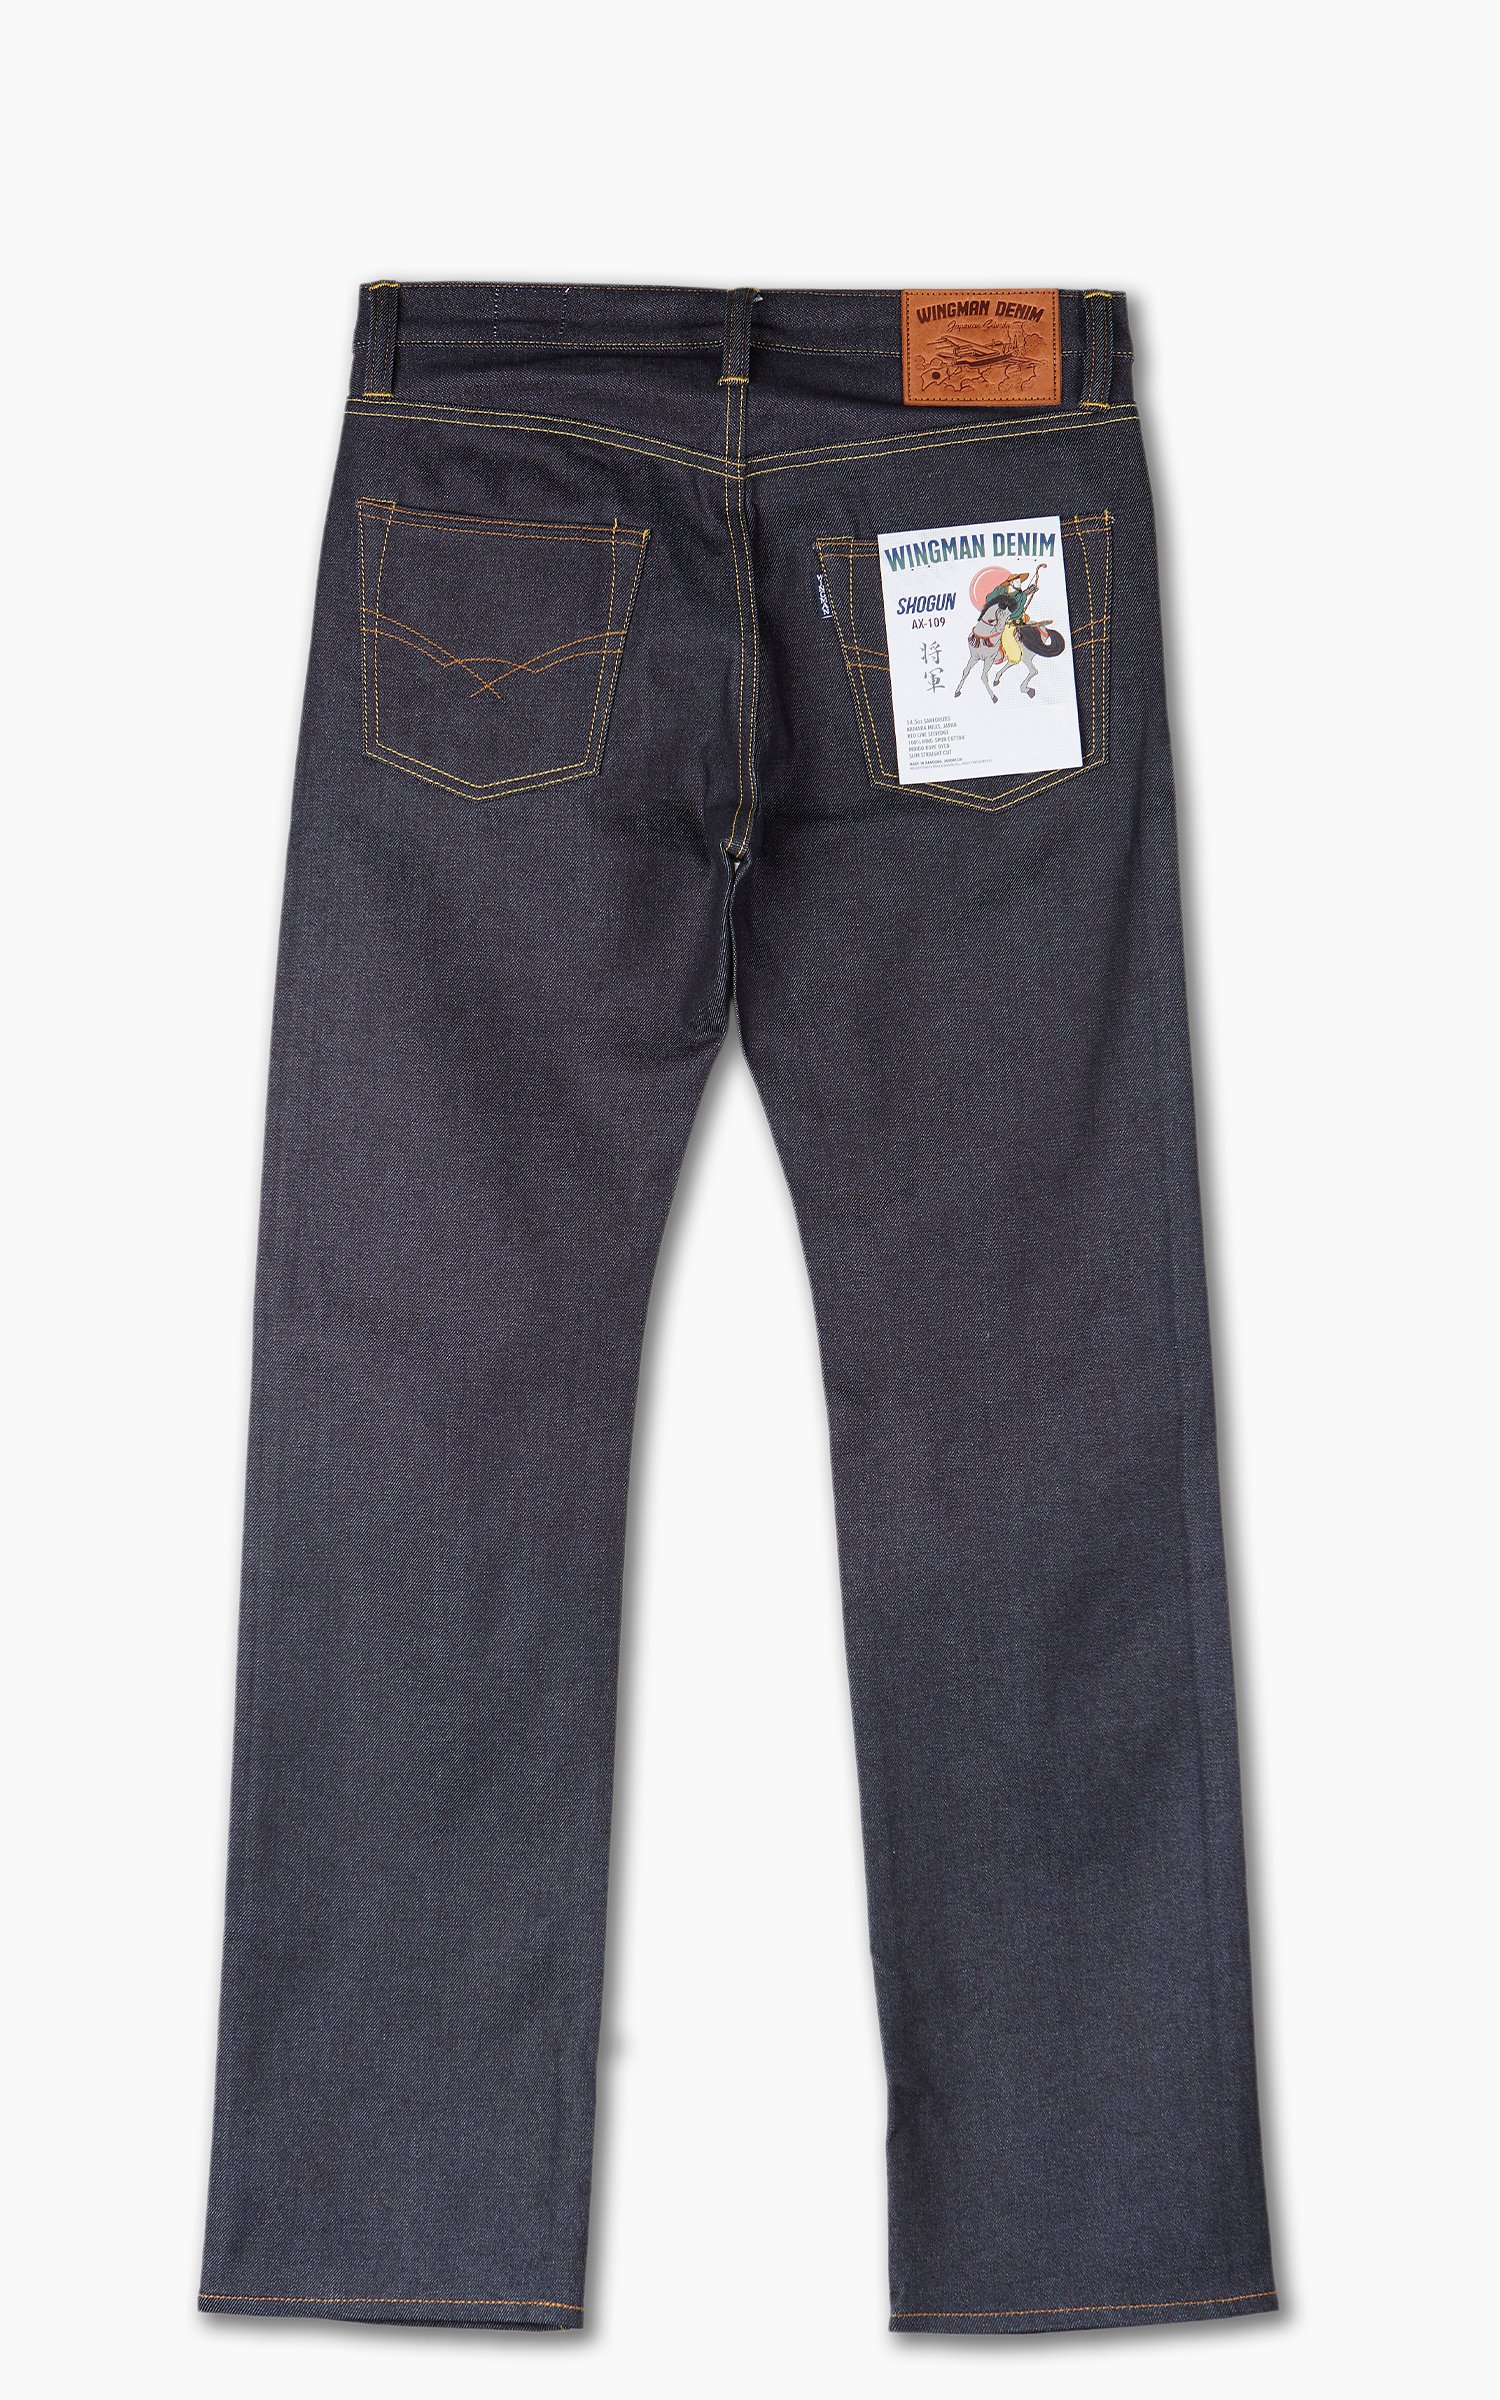 Wingman Denim Shogun AX-109 Jeans Selvedge 14.5oz | Cultizm